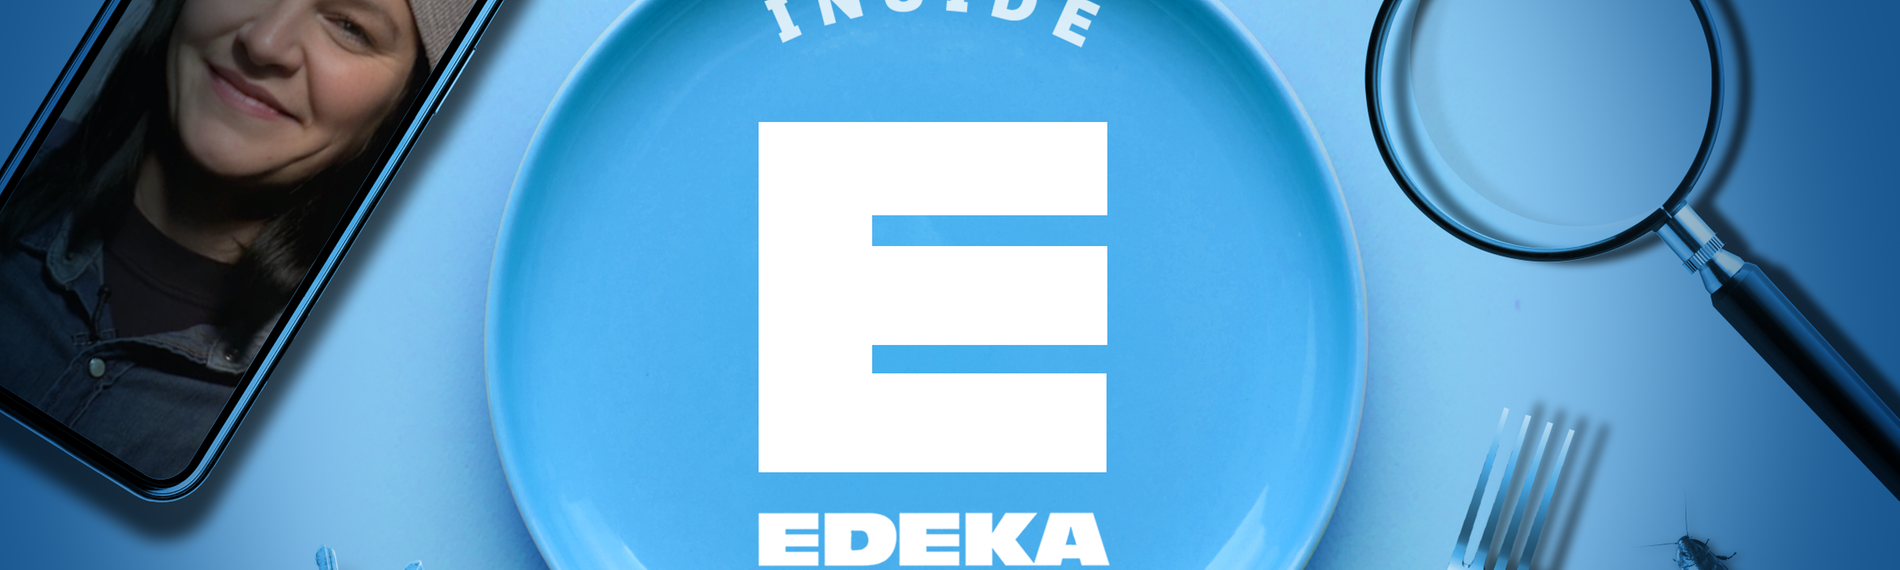 Teller mit Edeka-Logo